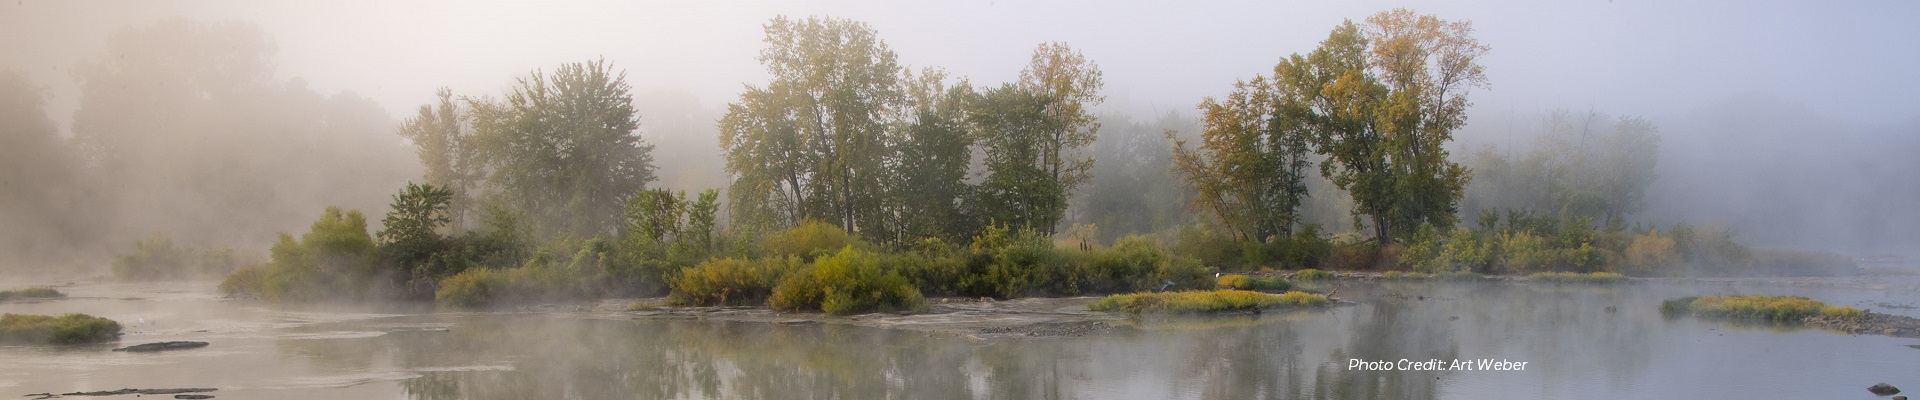 Howard Island misty morning; photo credit Art Weber